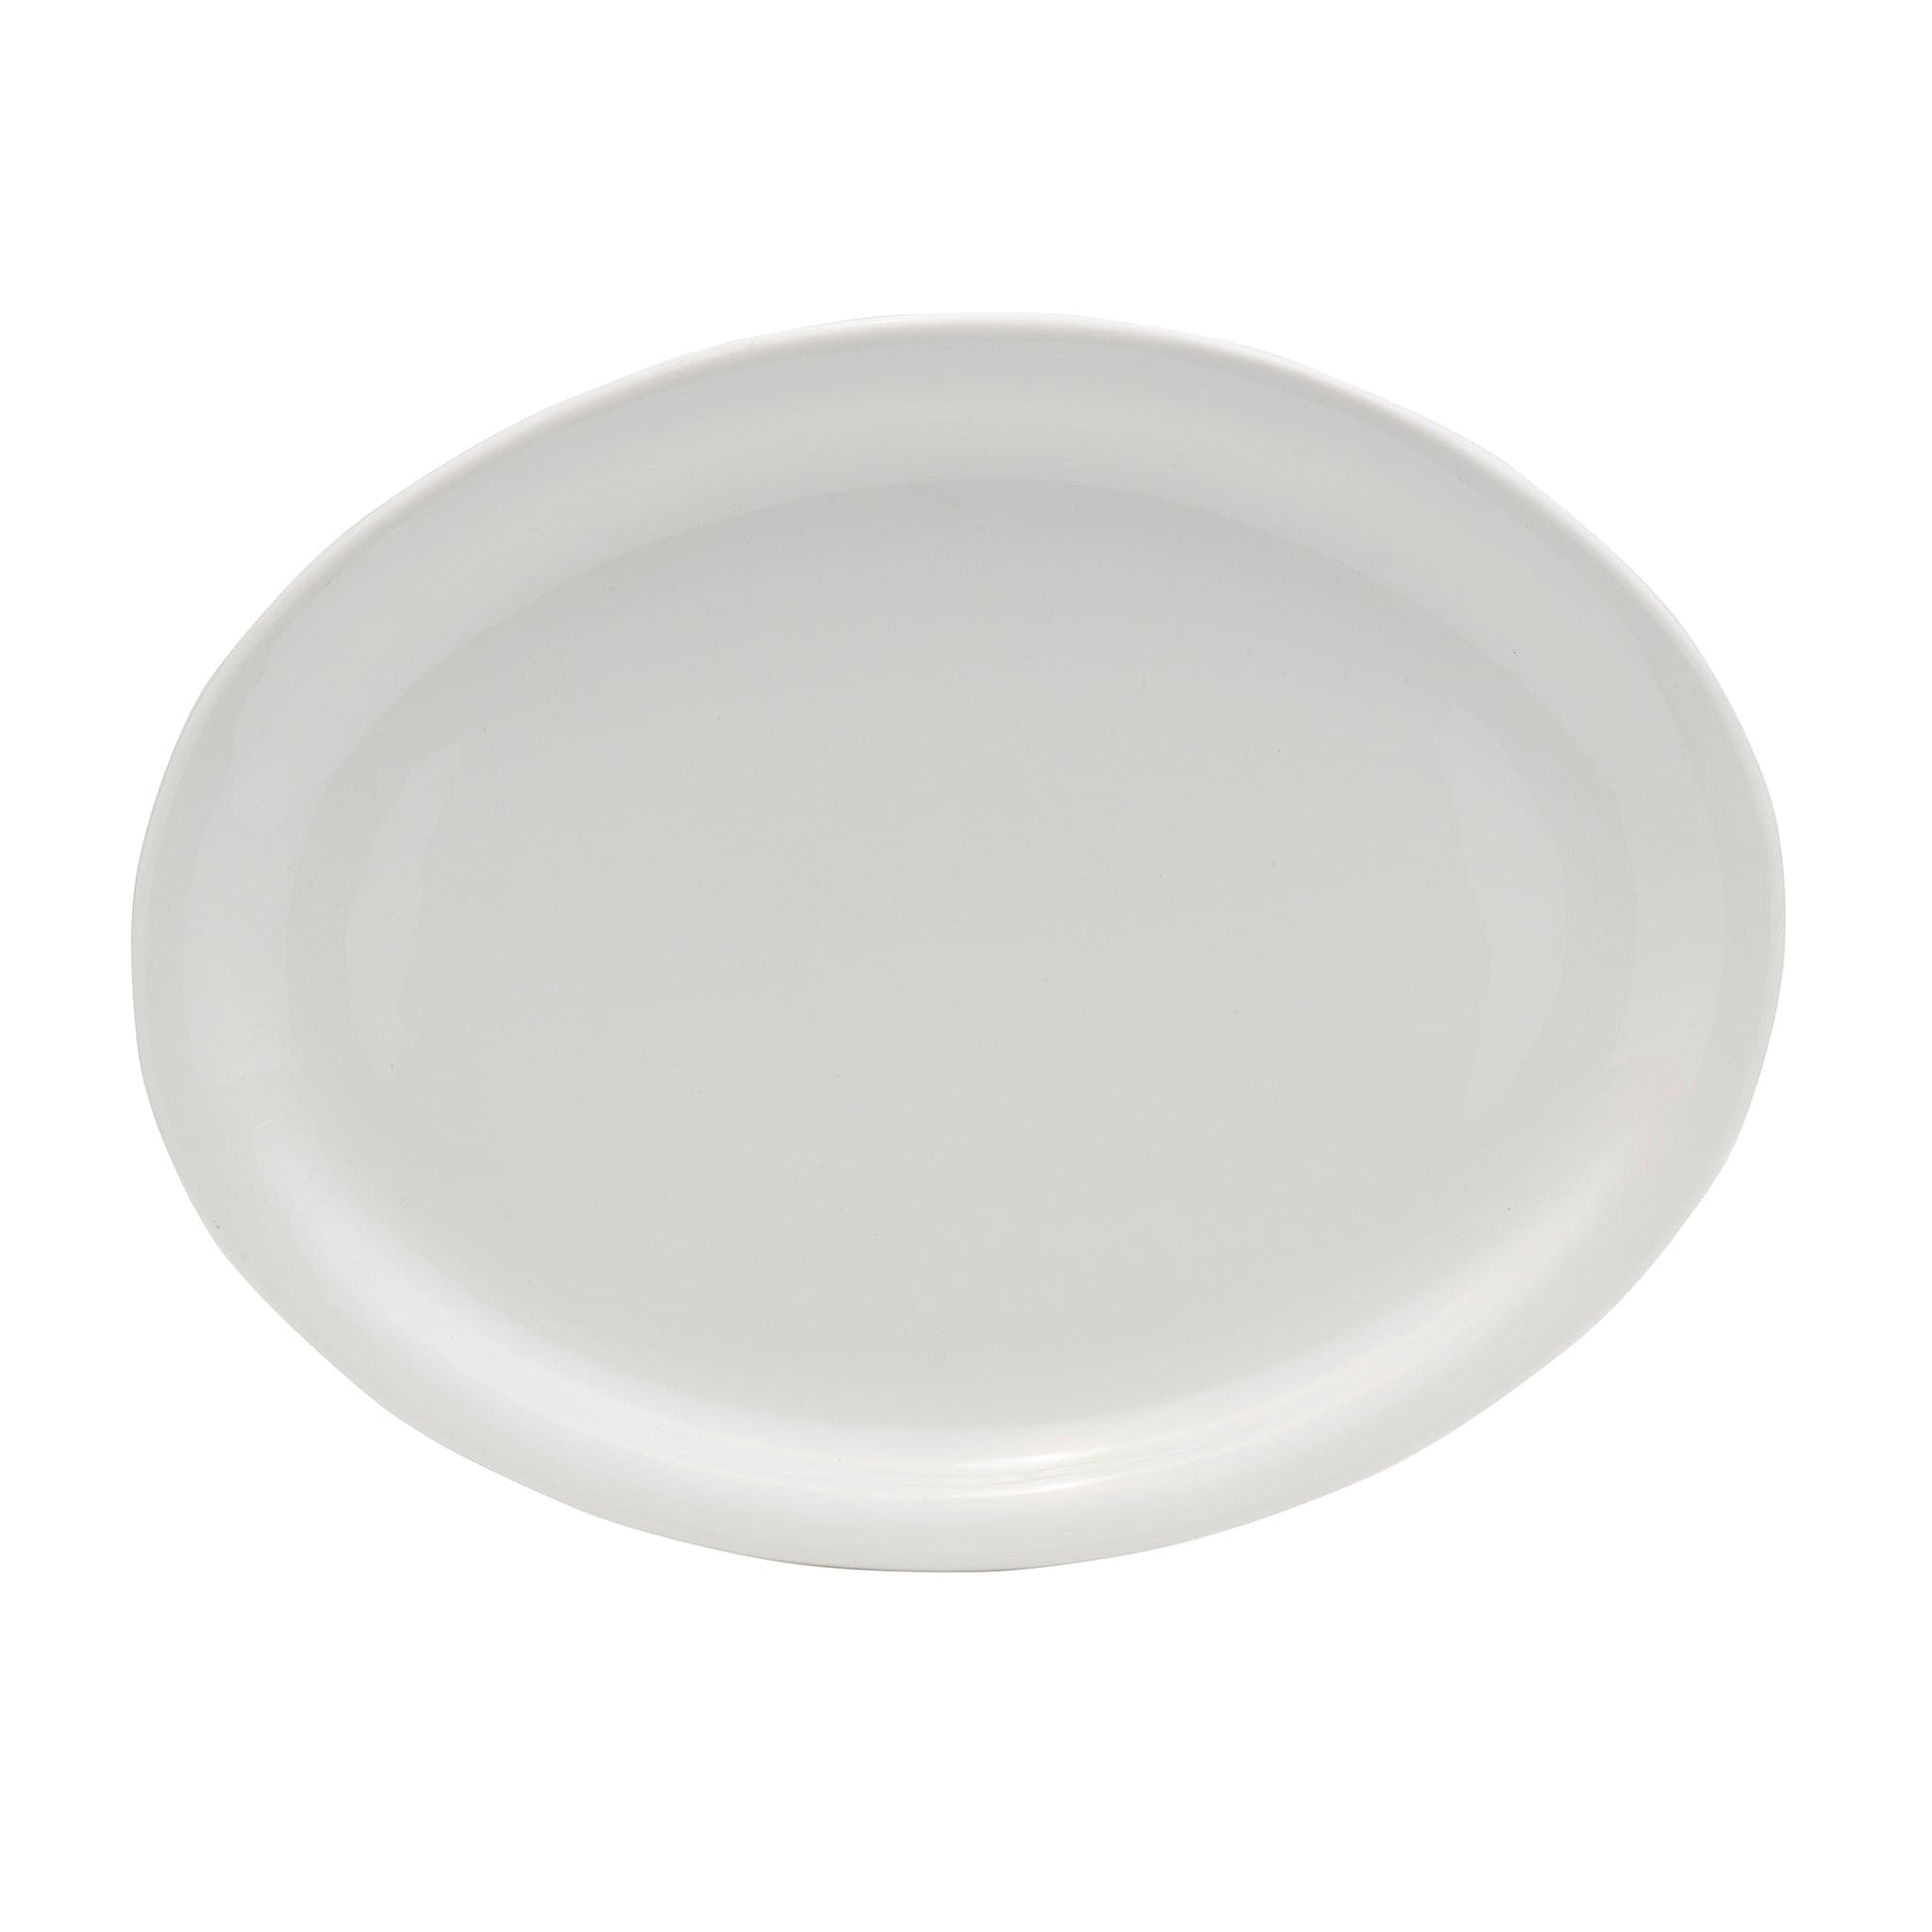 Saratoga Porcelain Oval Platter 13x10" White